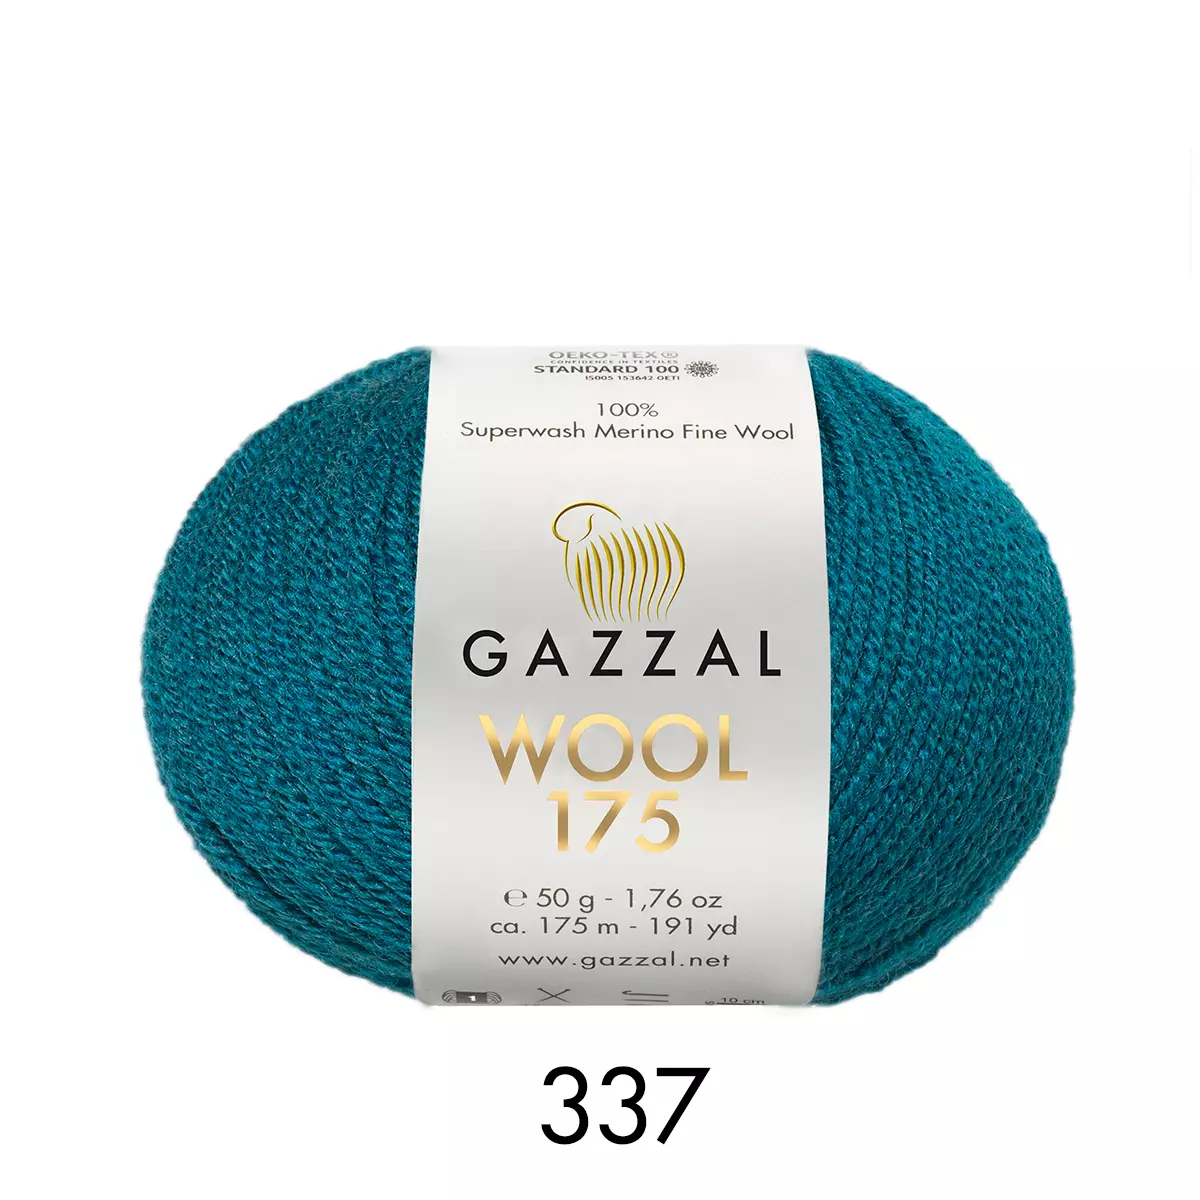 Gazzal Wool 175 100% merino – petrol